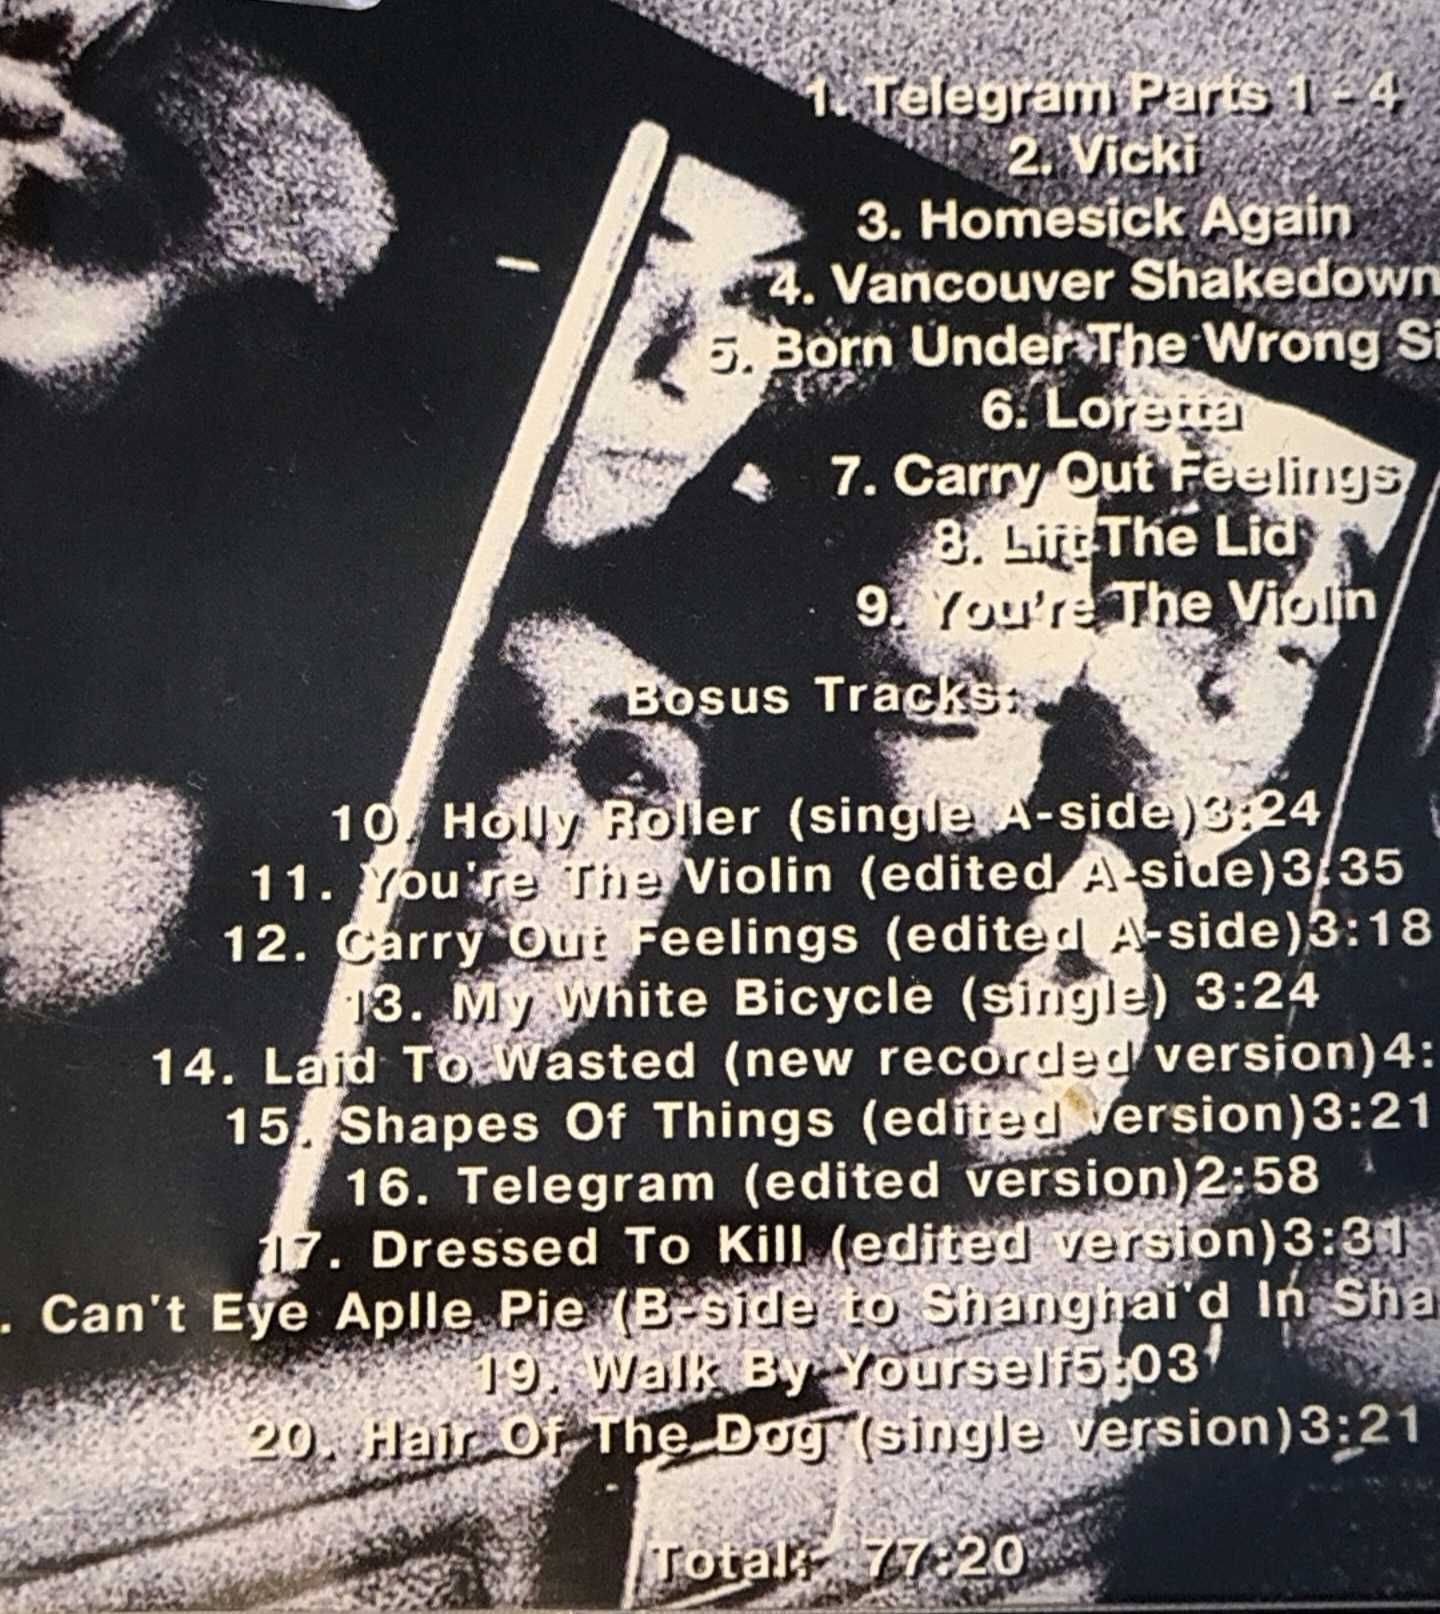 Nazareth CD диск The Remasters1976р.